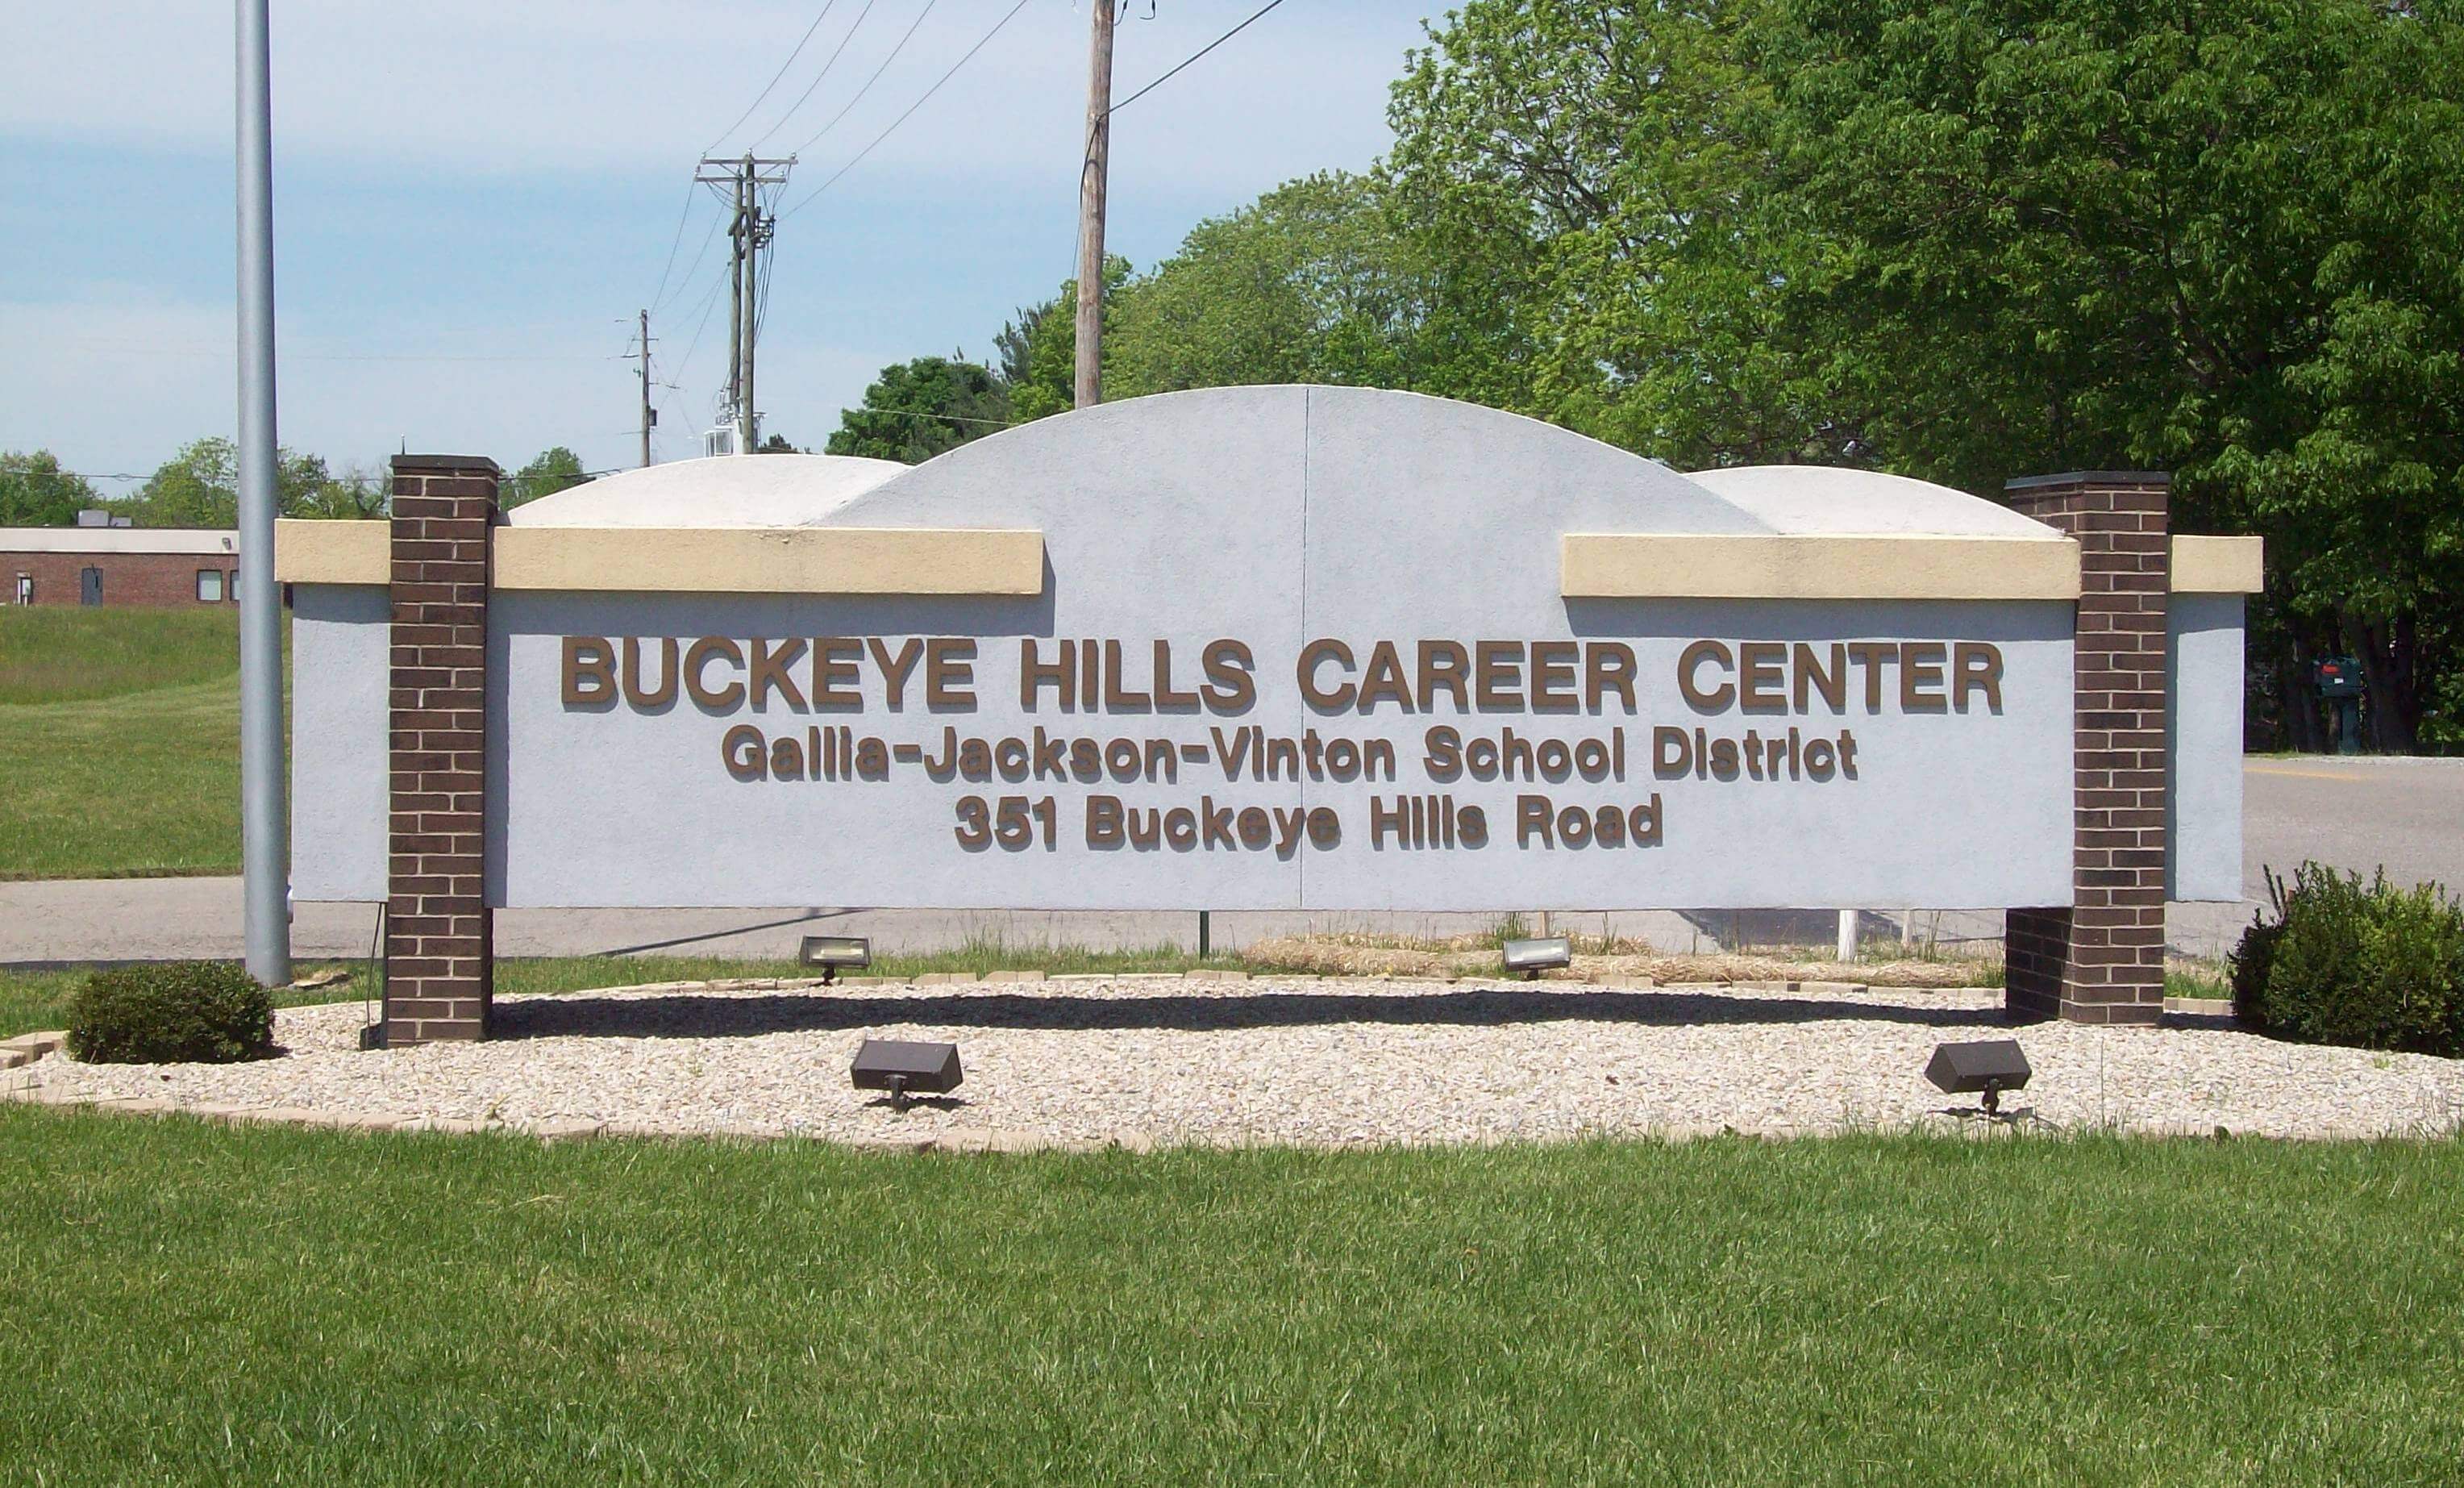 About Us - The Award-Winning Buckeye Hills Career Center